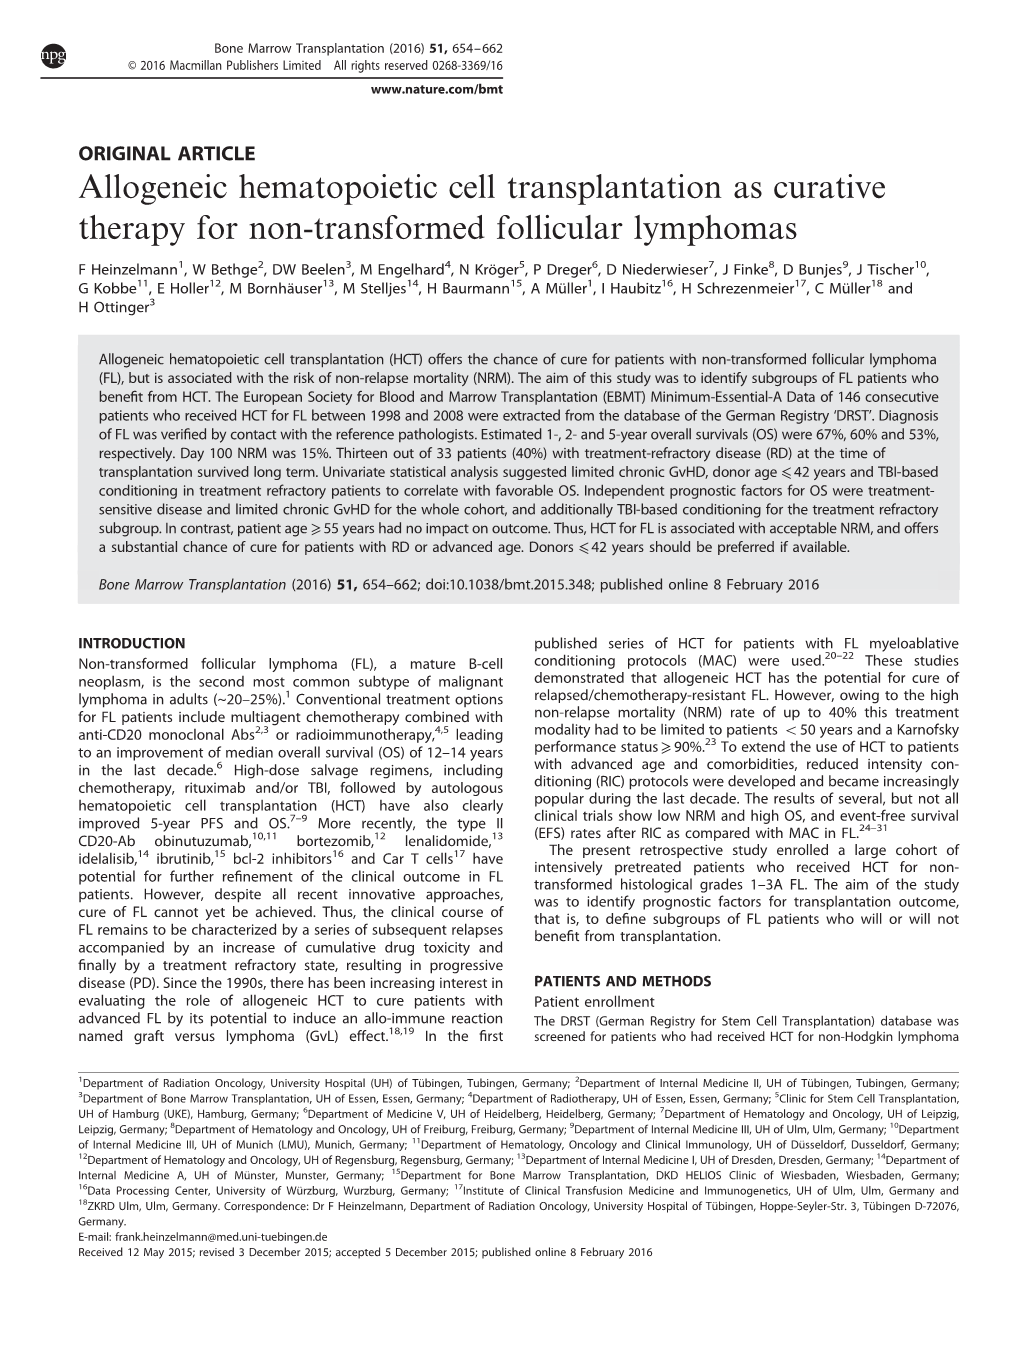 Allogeneic Hematopoietic Cell Transplantation As Curative Therapy for Non-Transformed Follicular Lymphomas